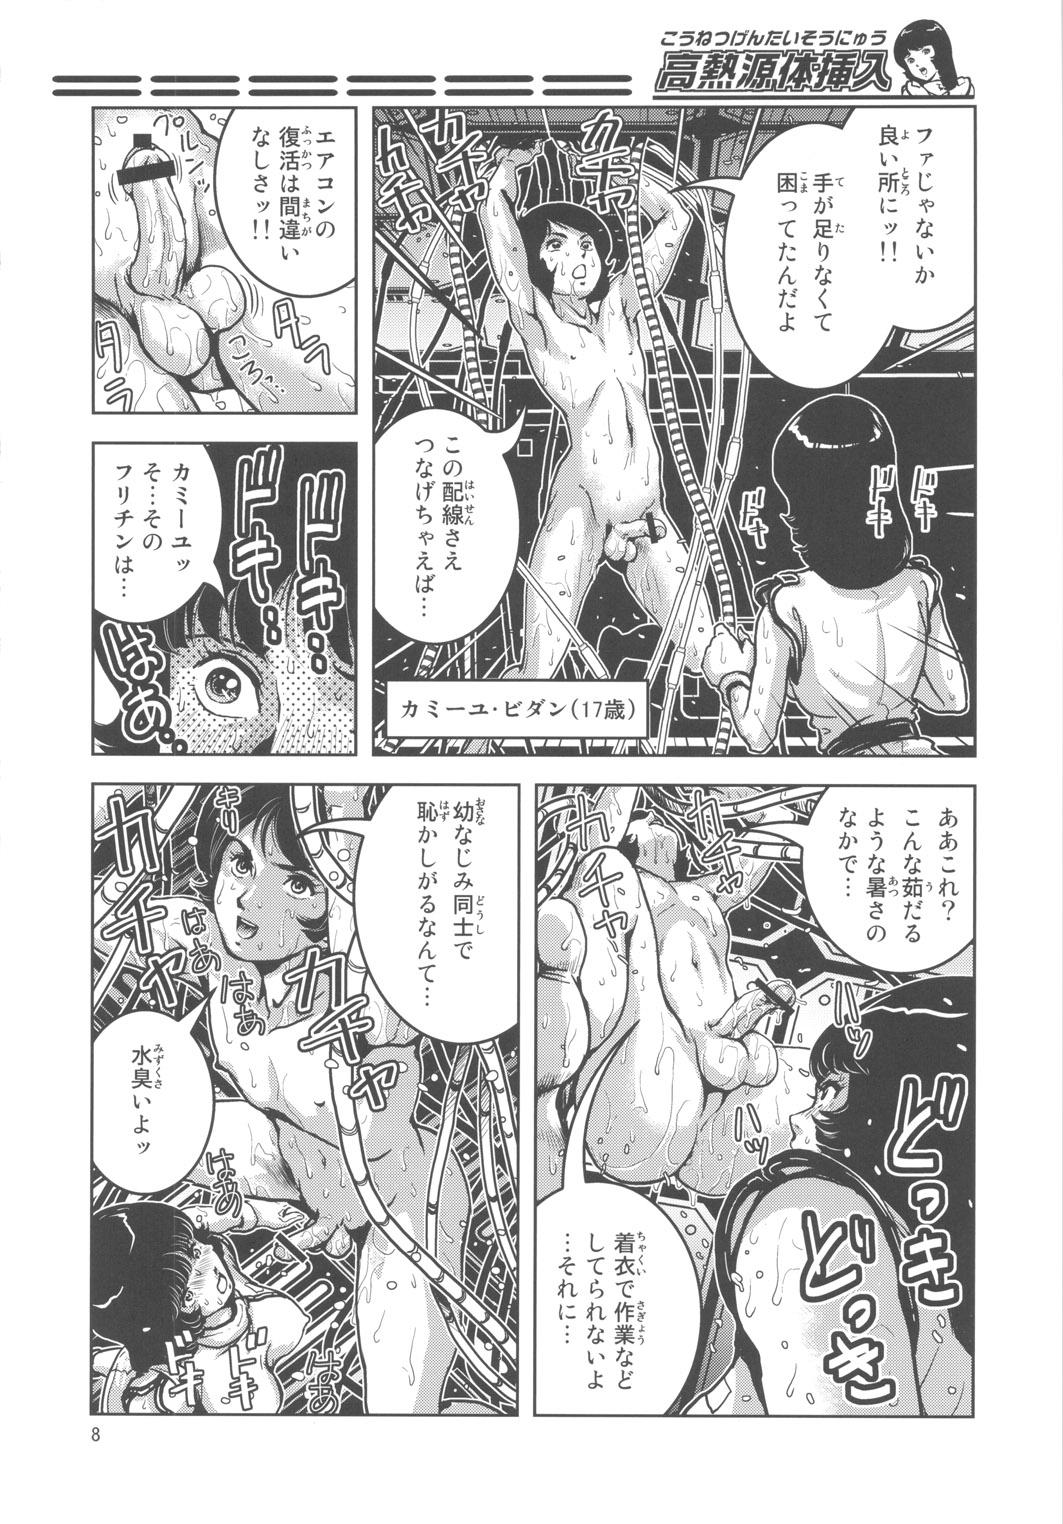 Les Kounetsu Gentei Sounyuu - Zeta gundam Secret - Page 7